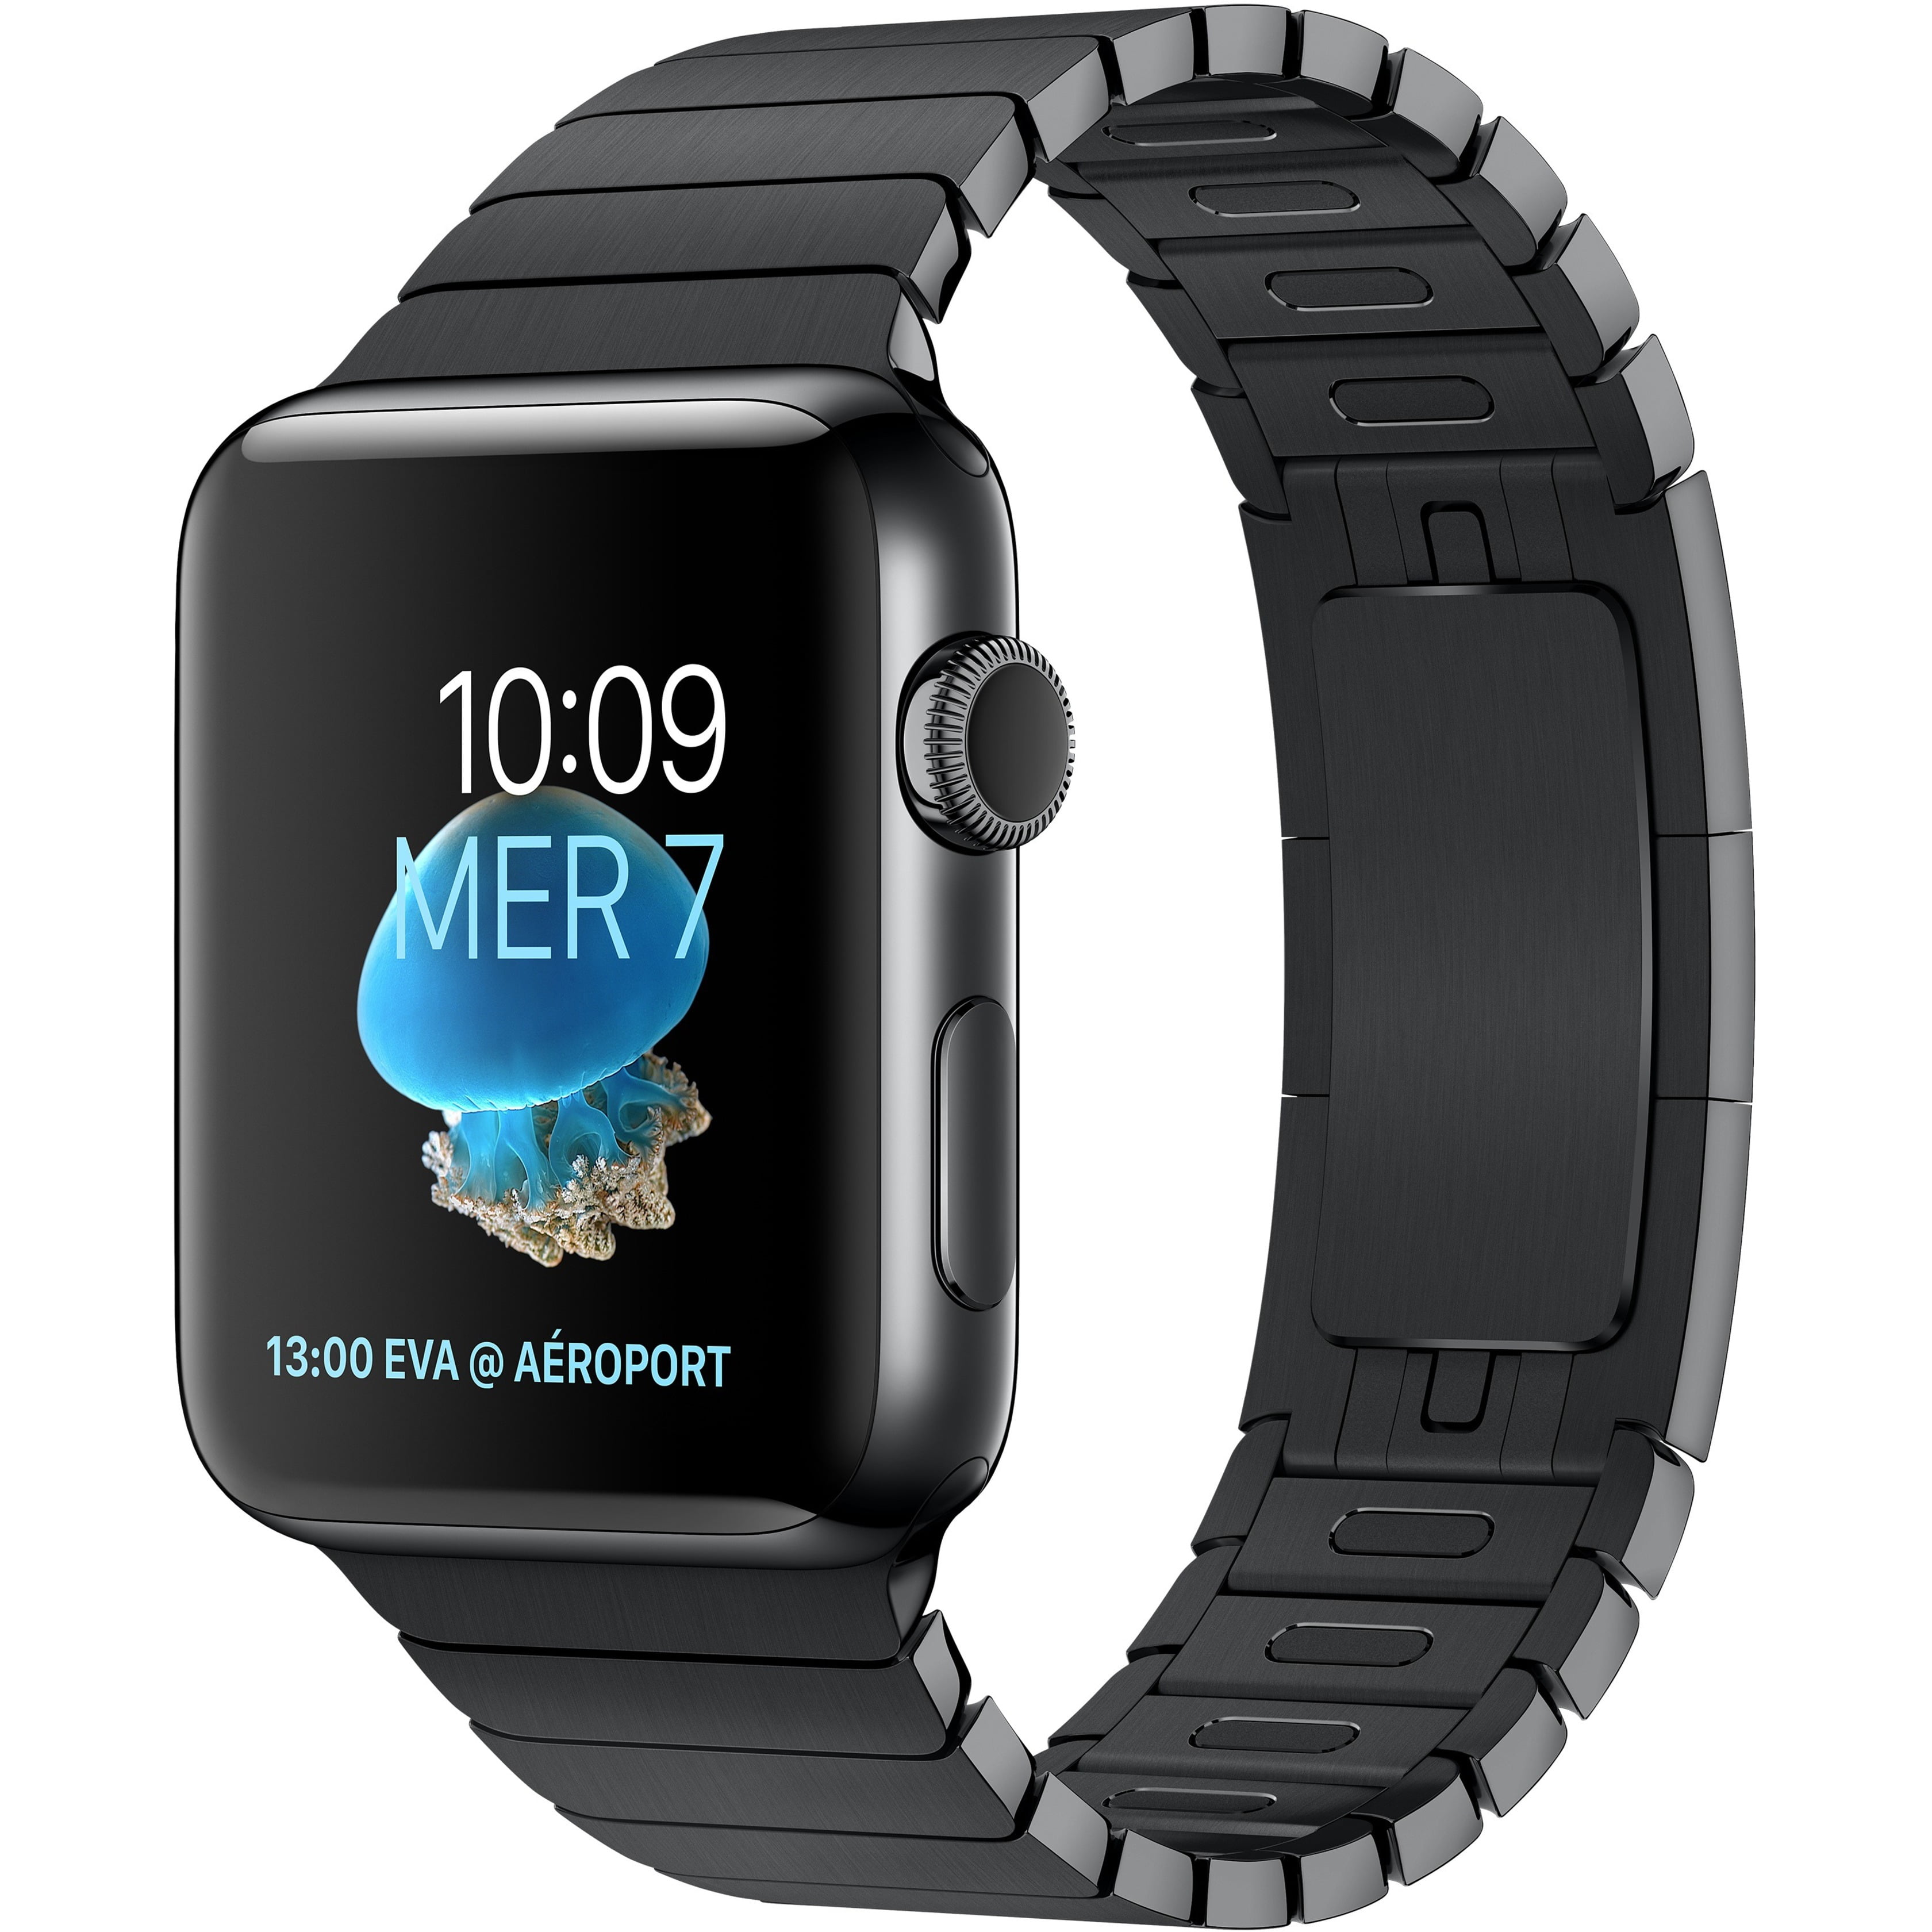 Apple Watch Series 2 Smart Watch - Walmart.com